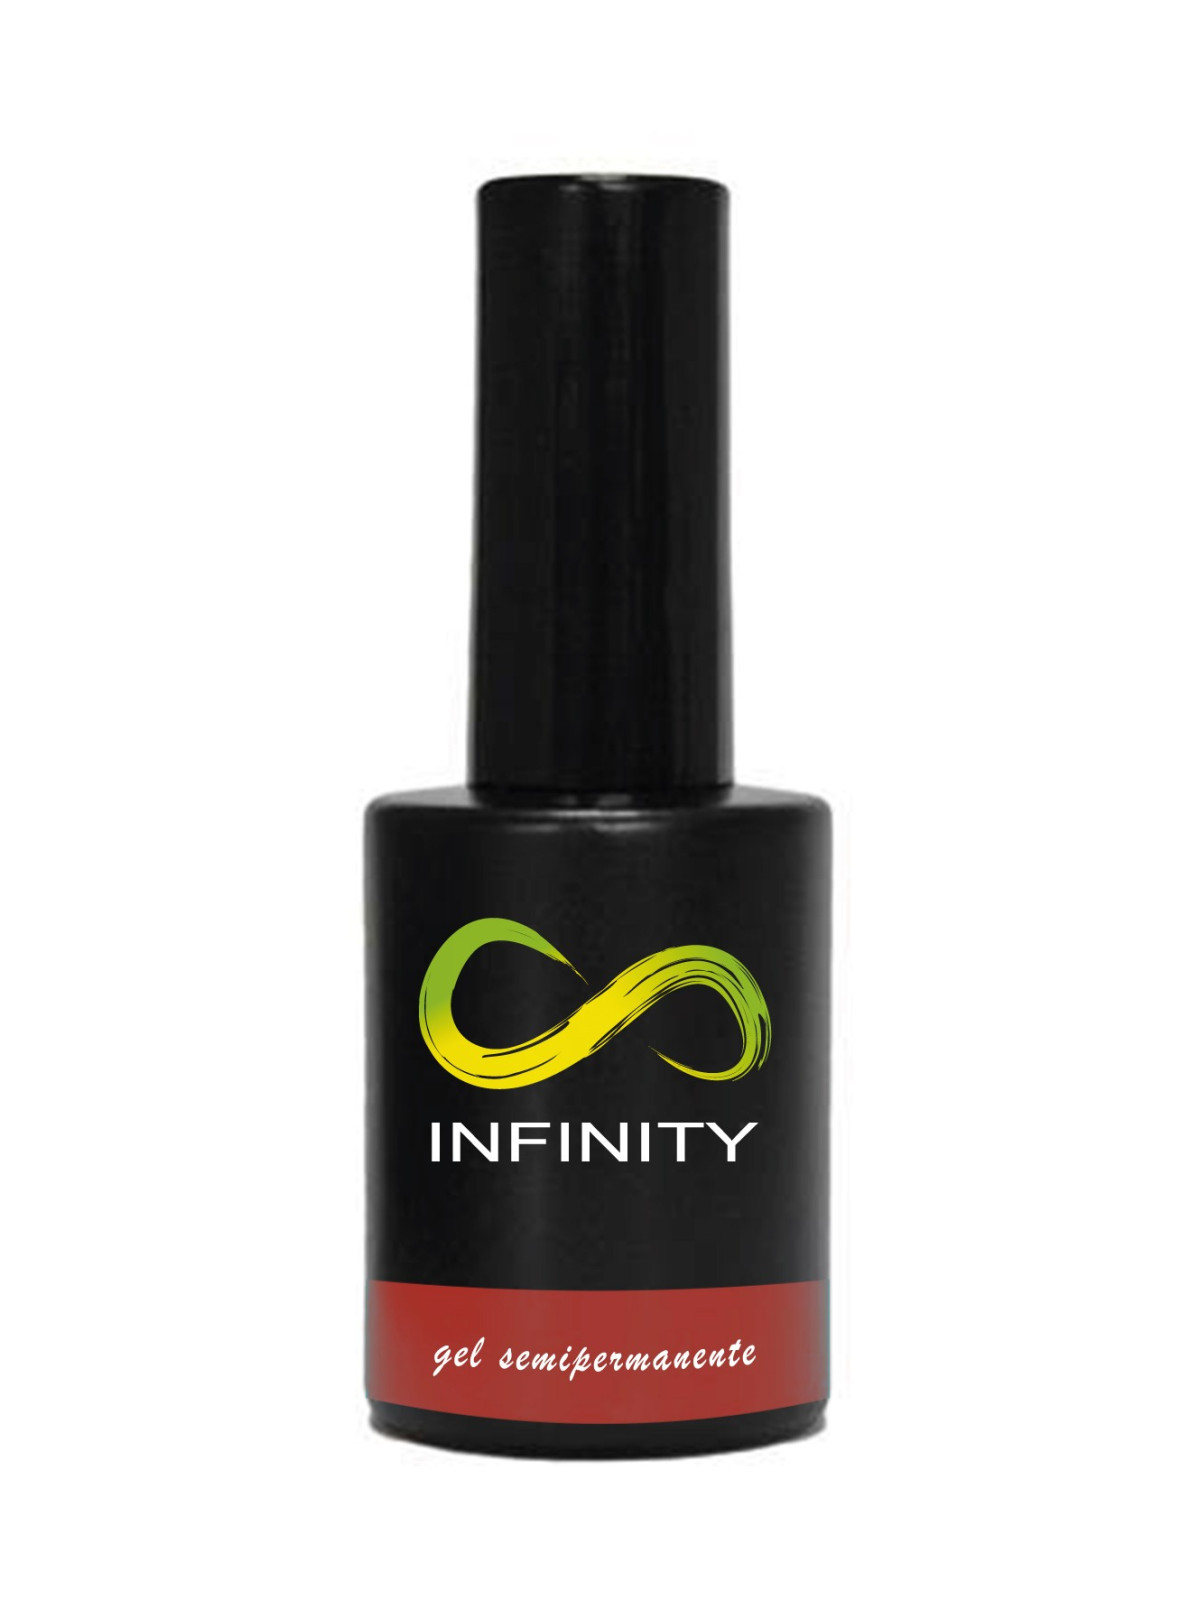 Infinity Smalto gel semipermanente 10ml12,00 €